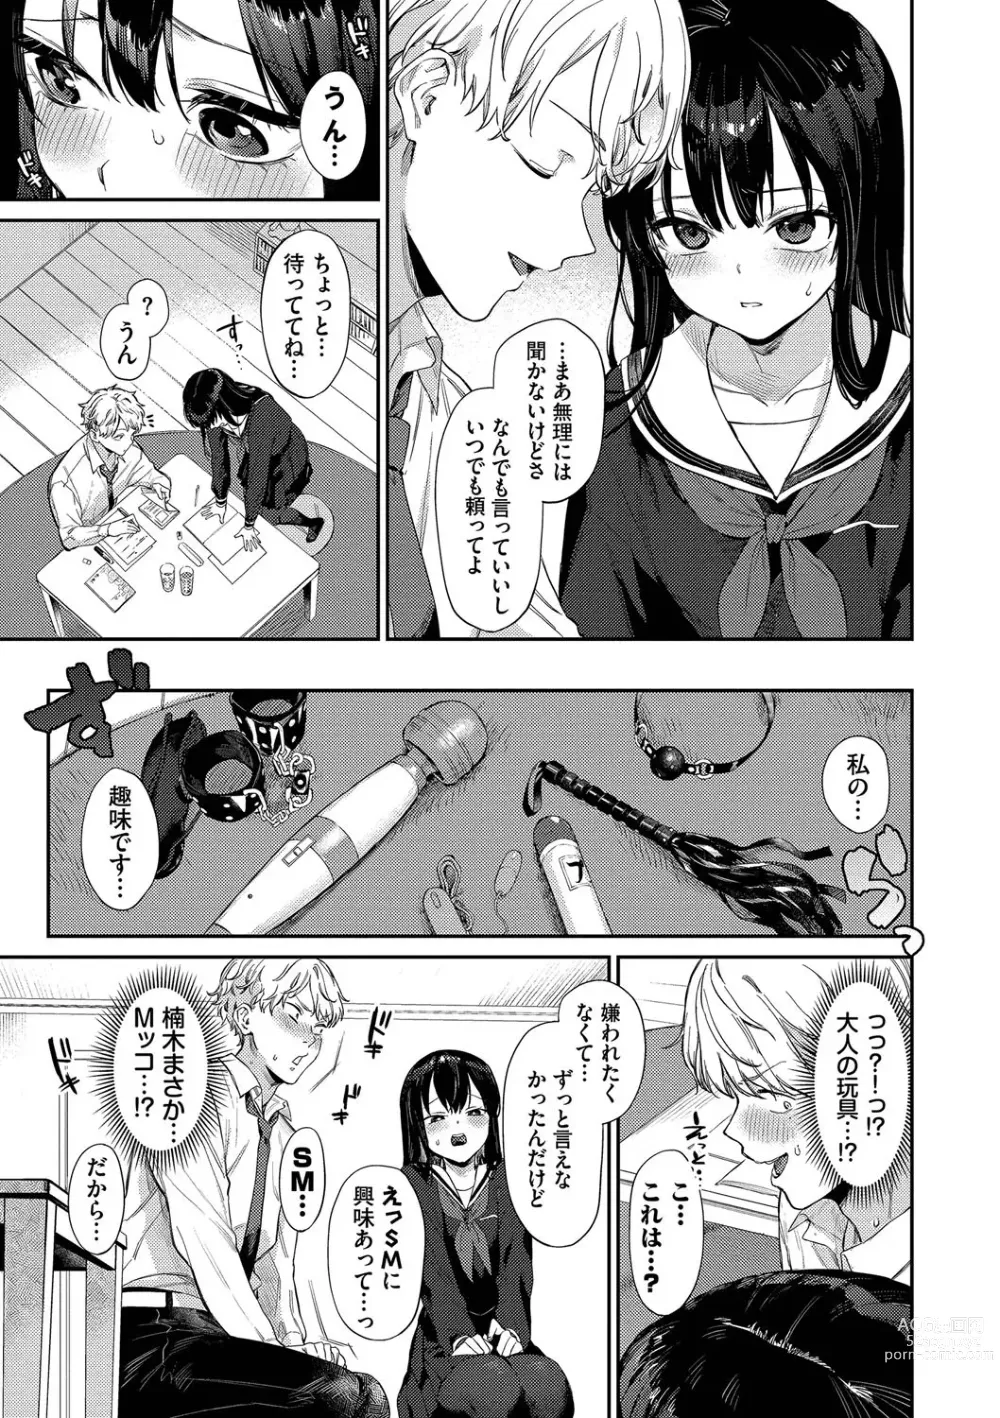 Page 6 of manga Mutsuri Bloom